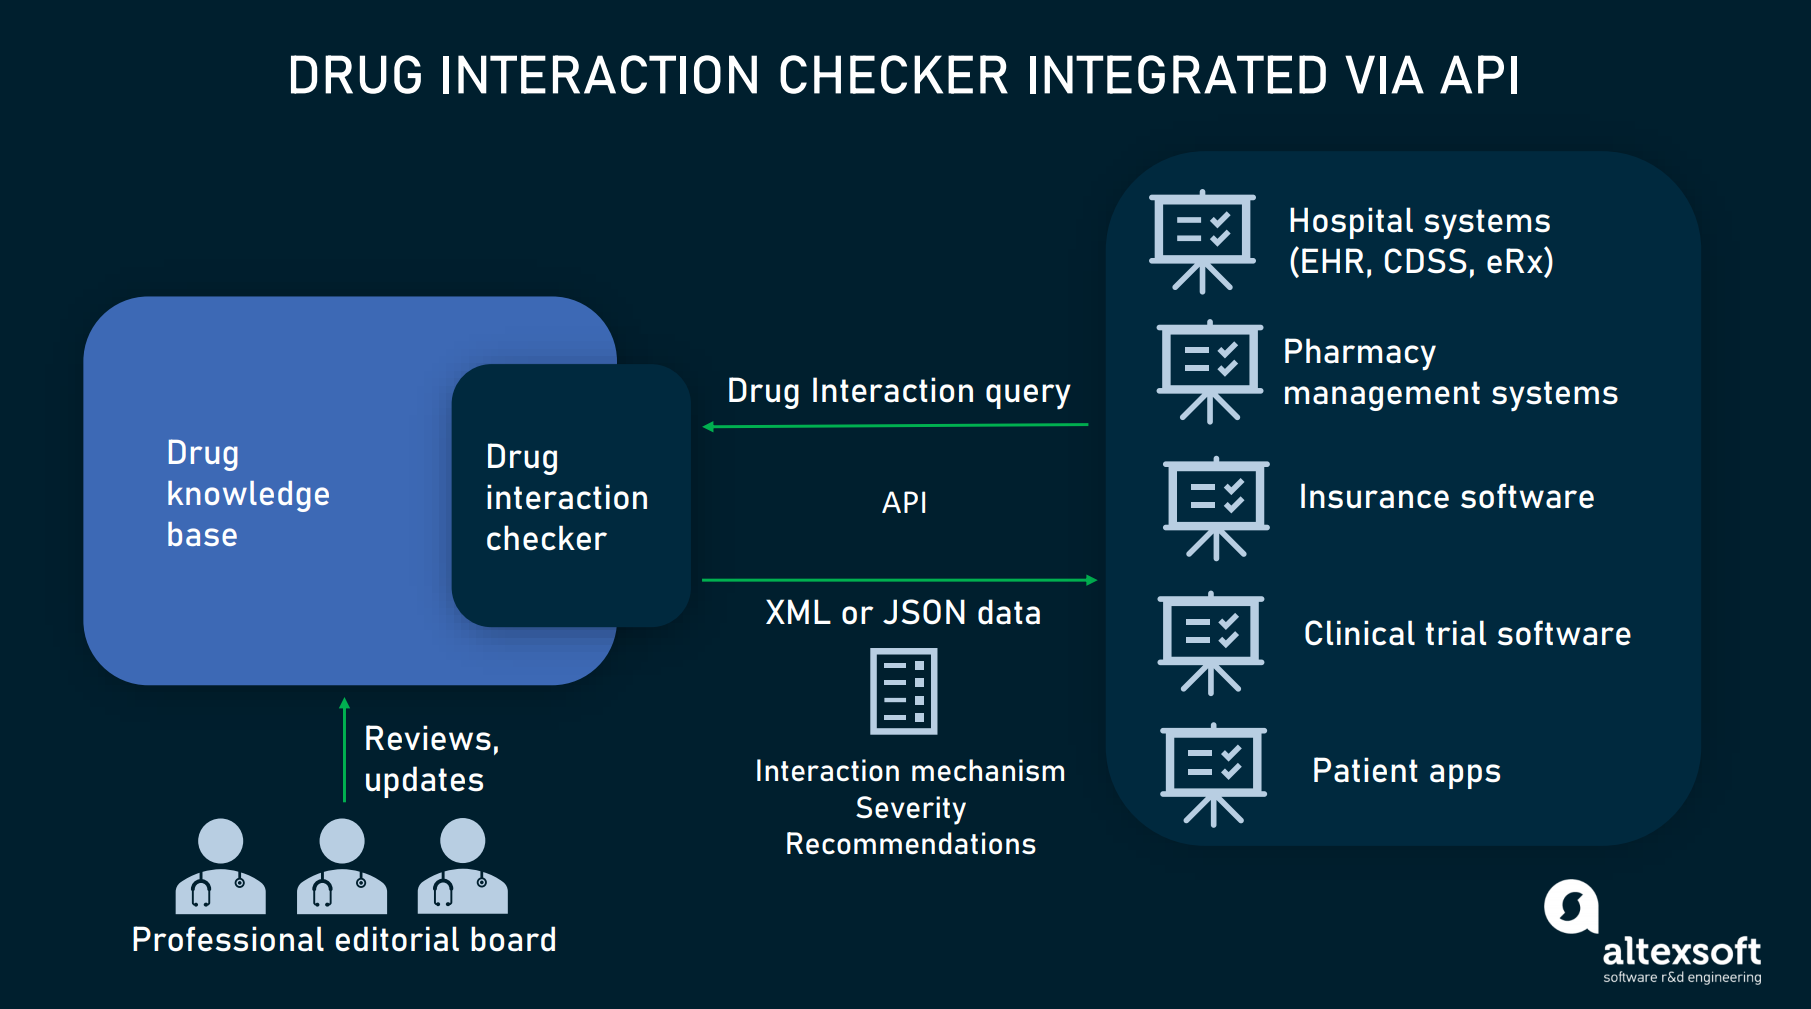 Drug interaction checking via API